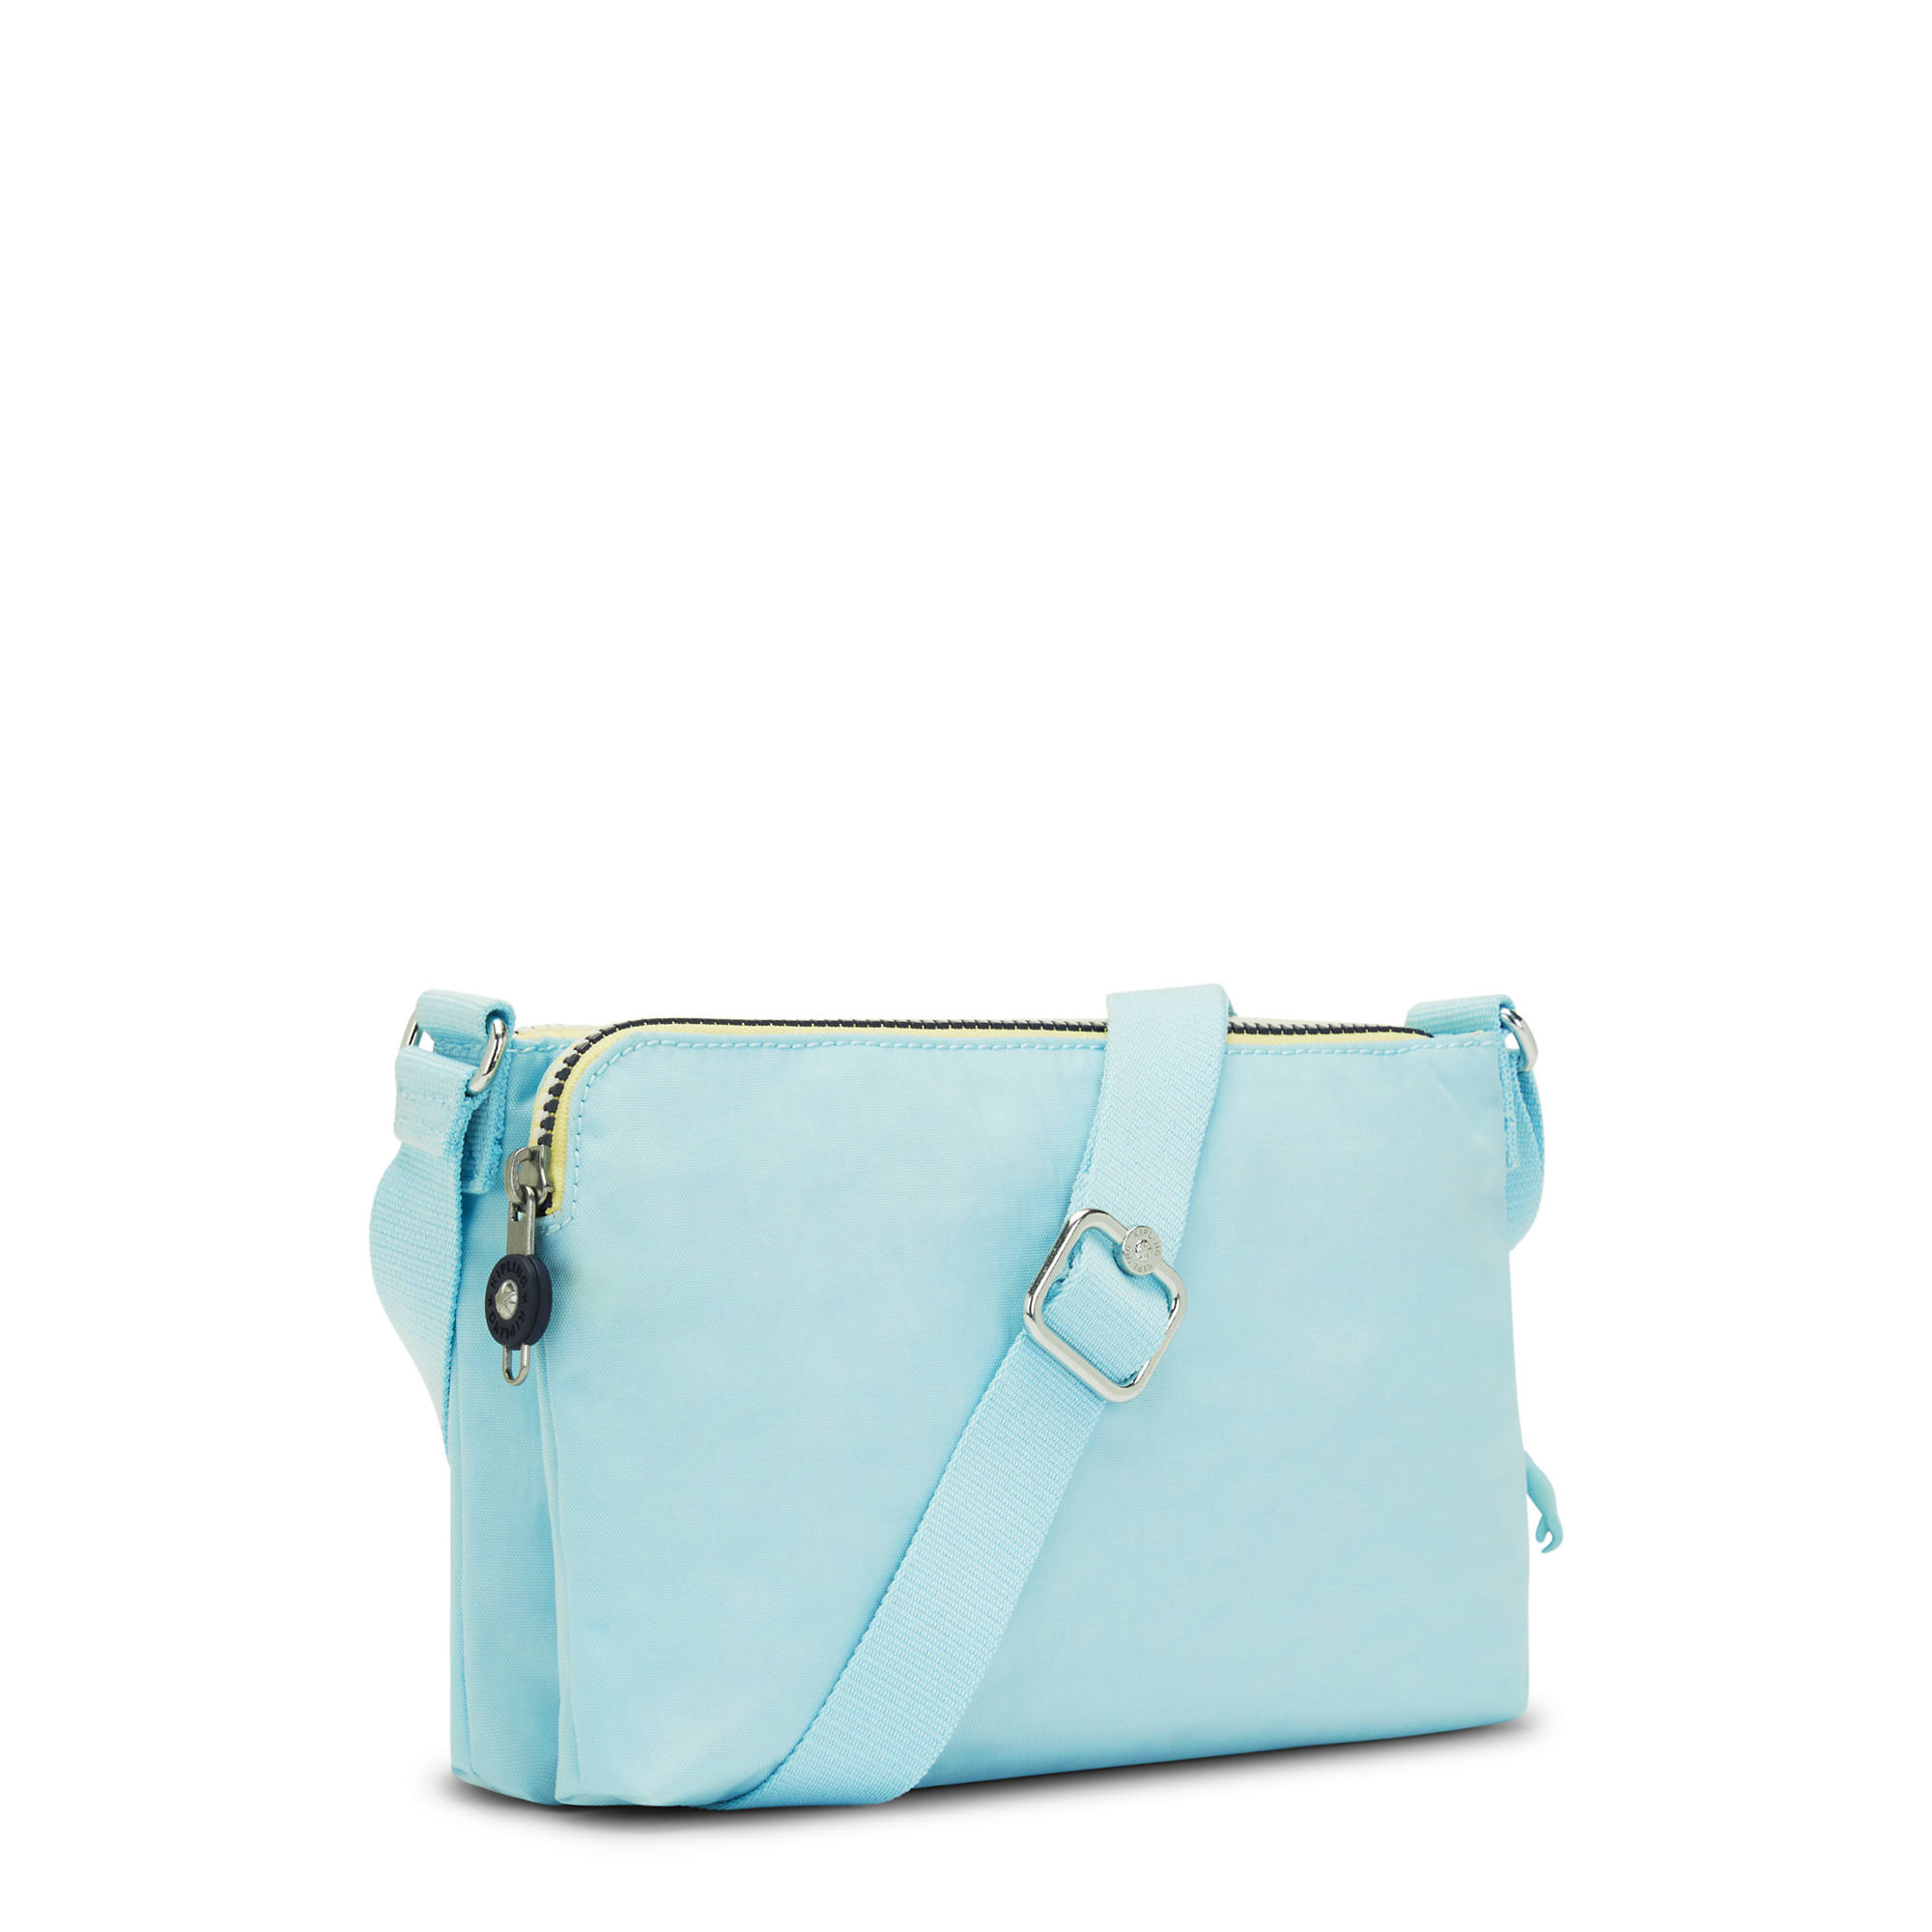 Kipling Women's Boyd Crossbody Handbag with Adjustable Strap | eBay